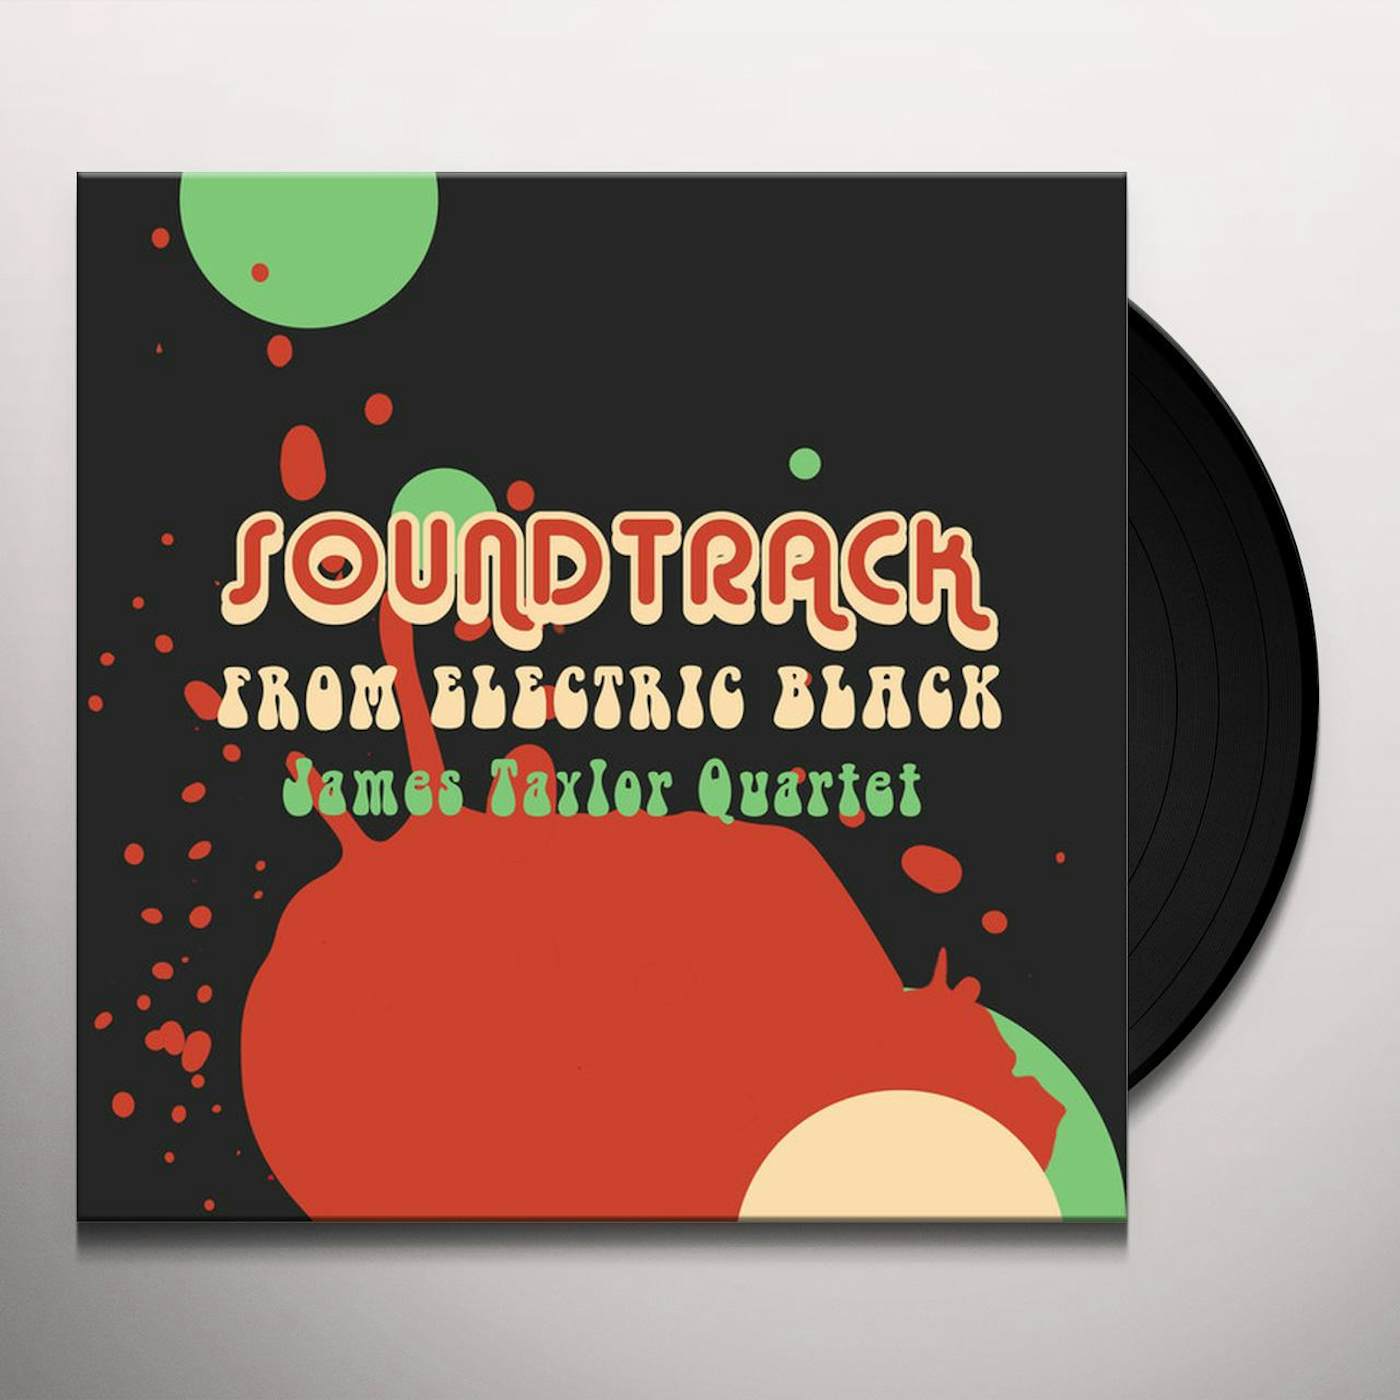 James Taylor Quartet Soundtrack From Electric Black Vinyl Record